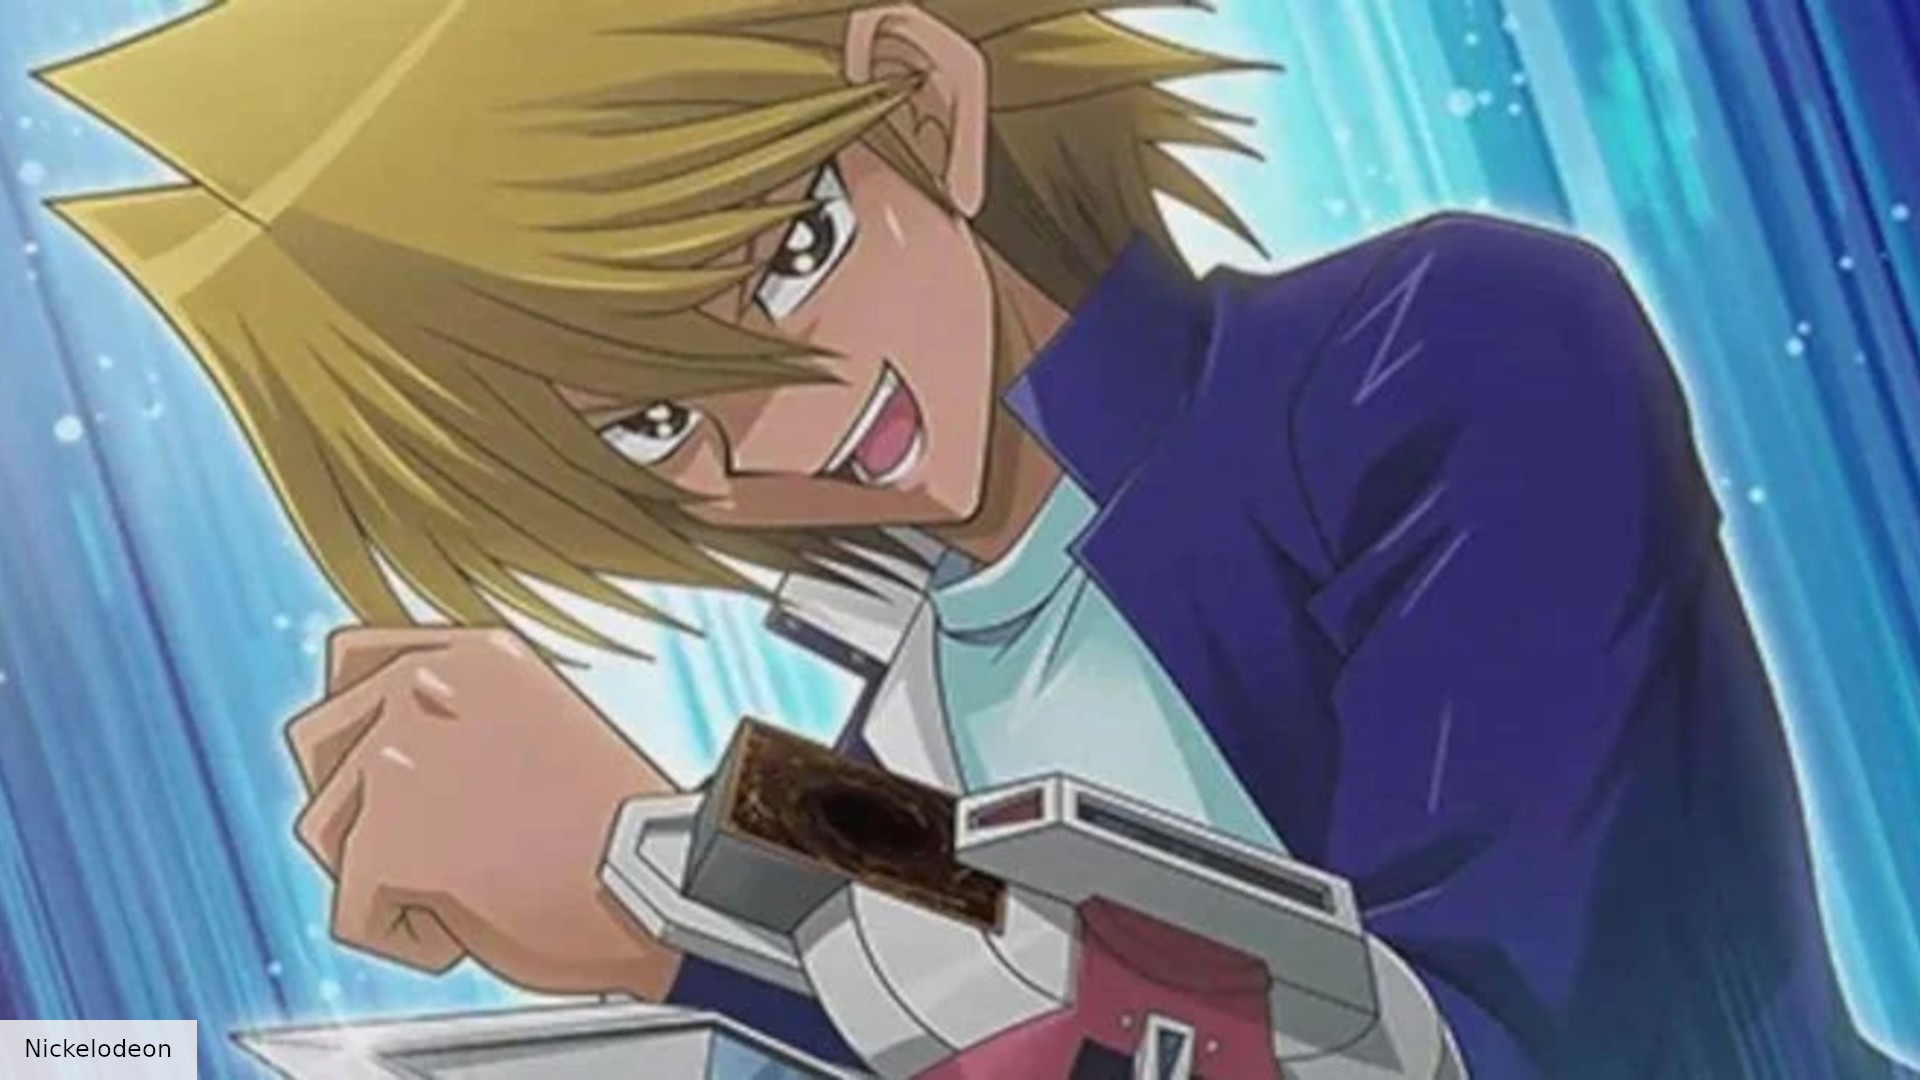 The best YuGiOh characters guide - Konami YuGiOh anime screenshot showing Joey Wheeler